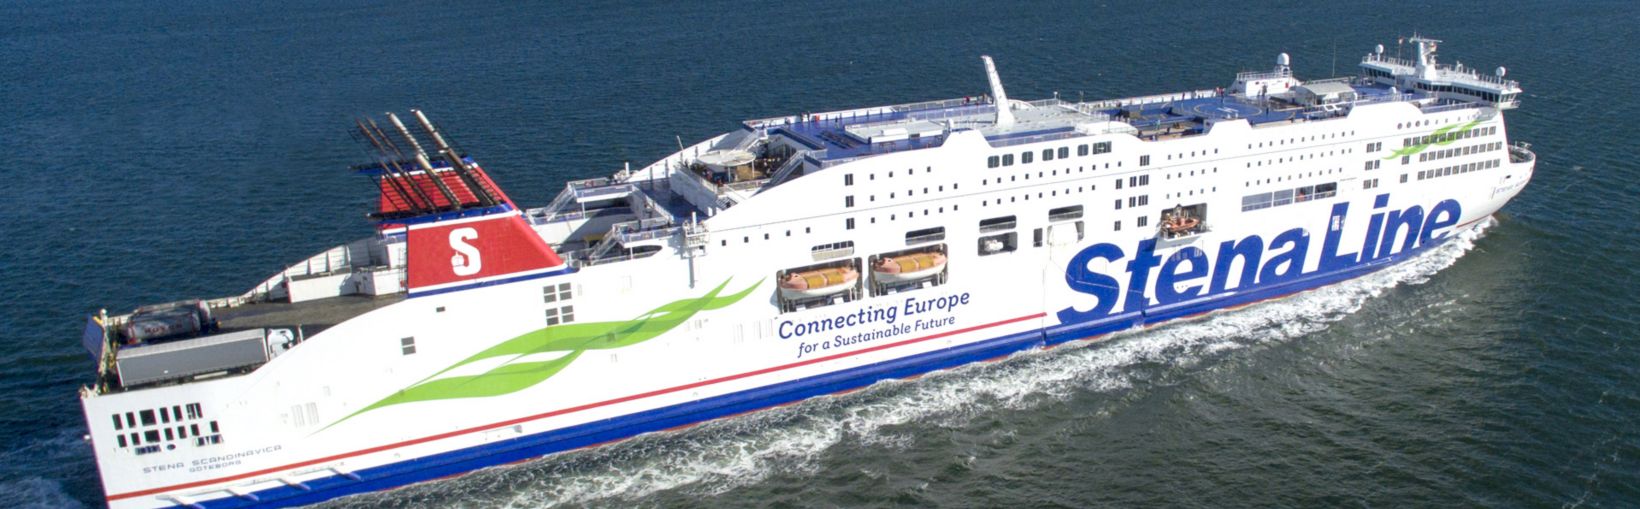 Stena Scandinavica ferry at sea